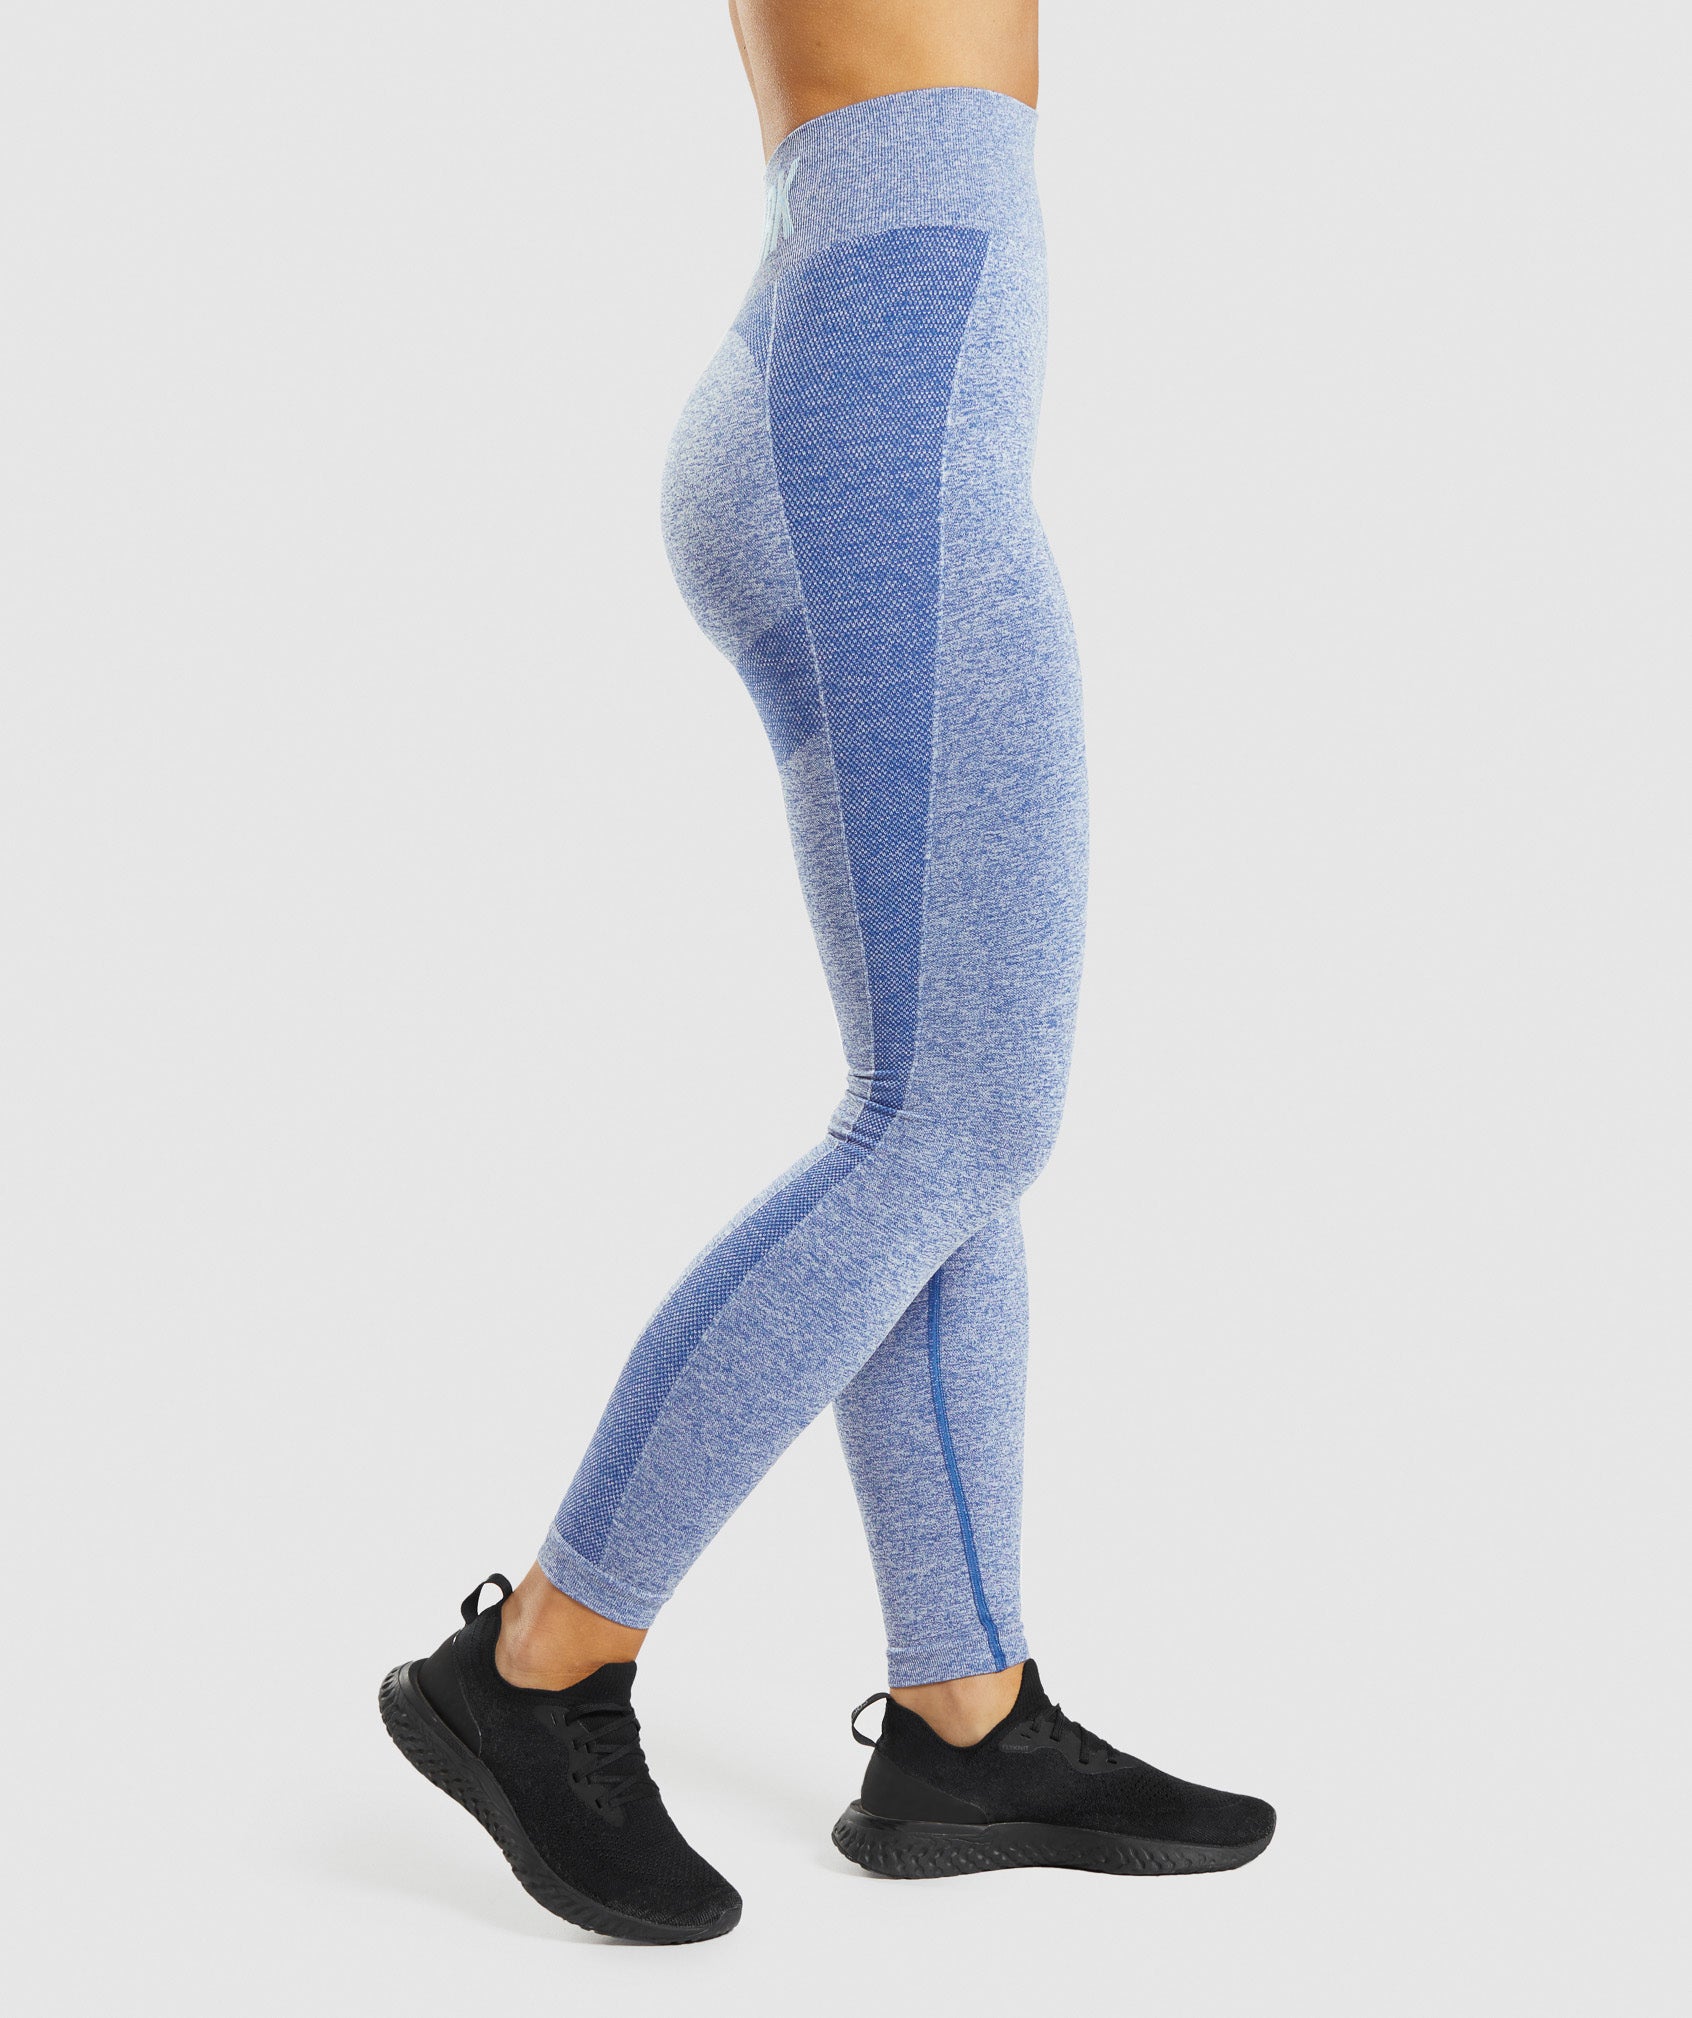 Gymshark Women's Gray and Blue Flex Leggings NO SIZE TAG Size XS EUC